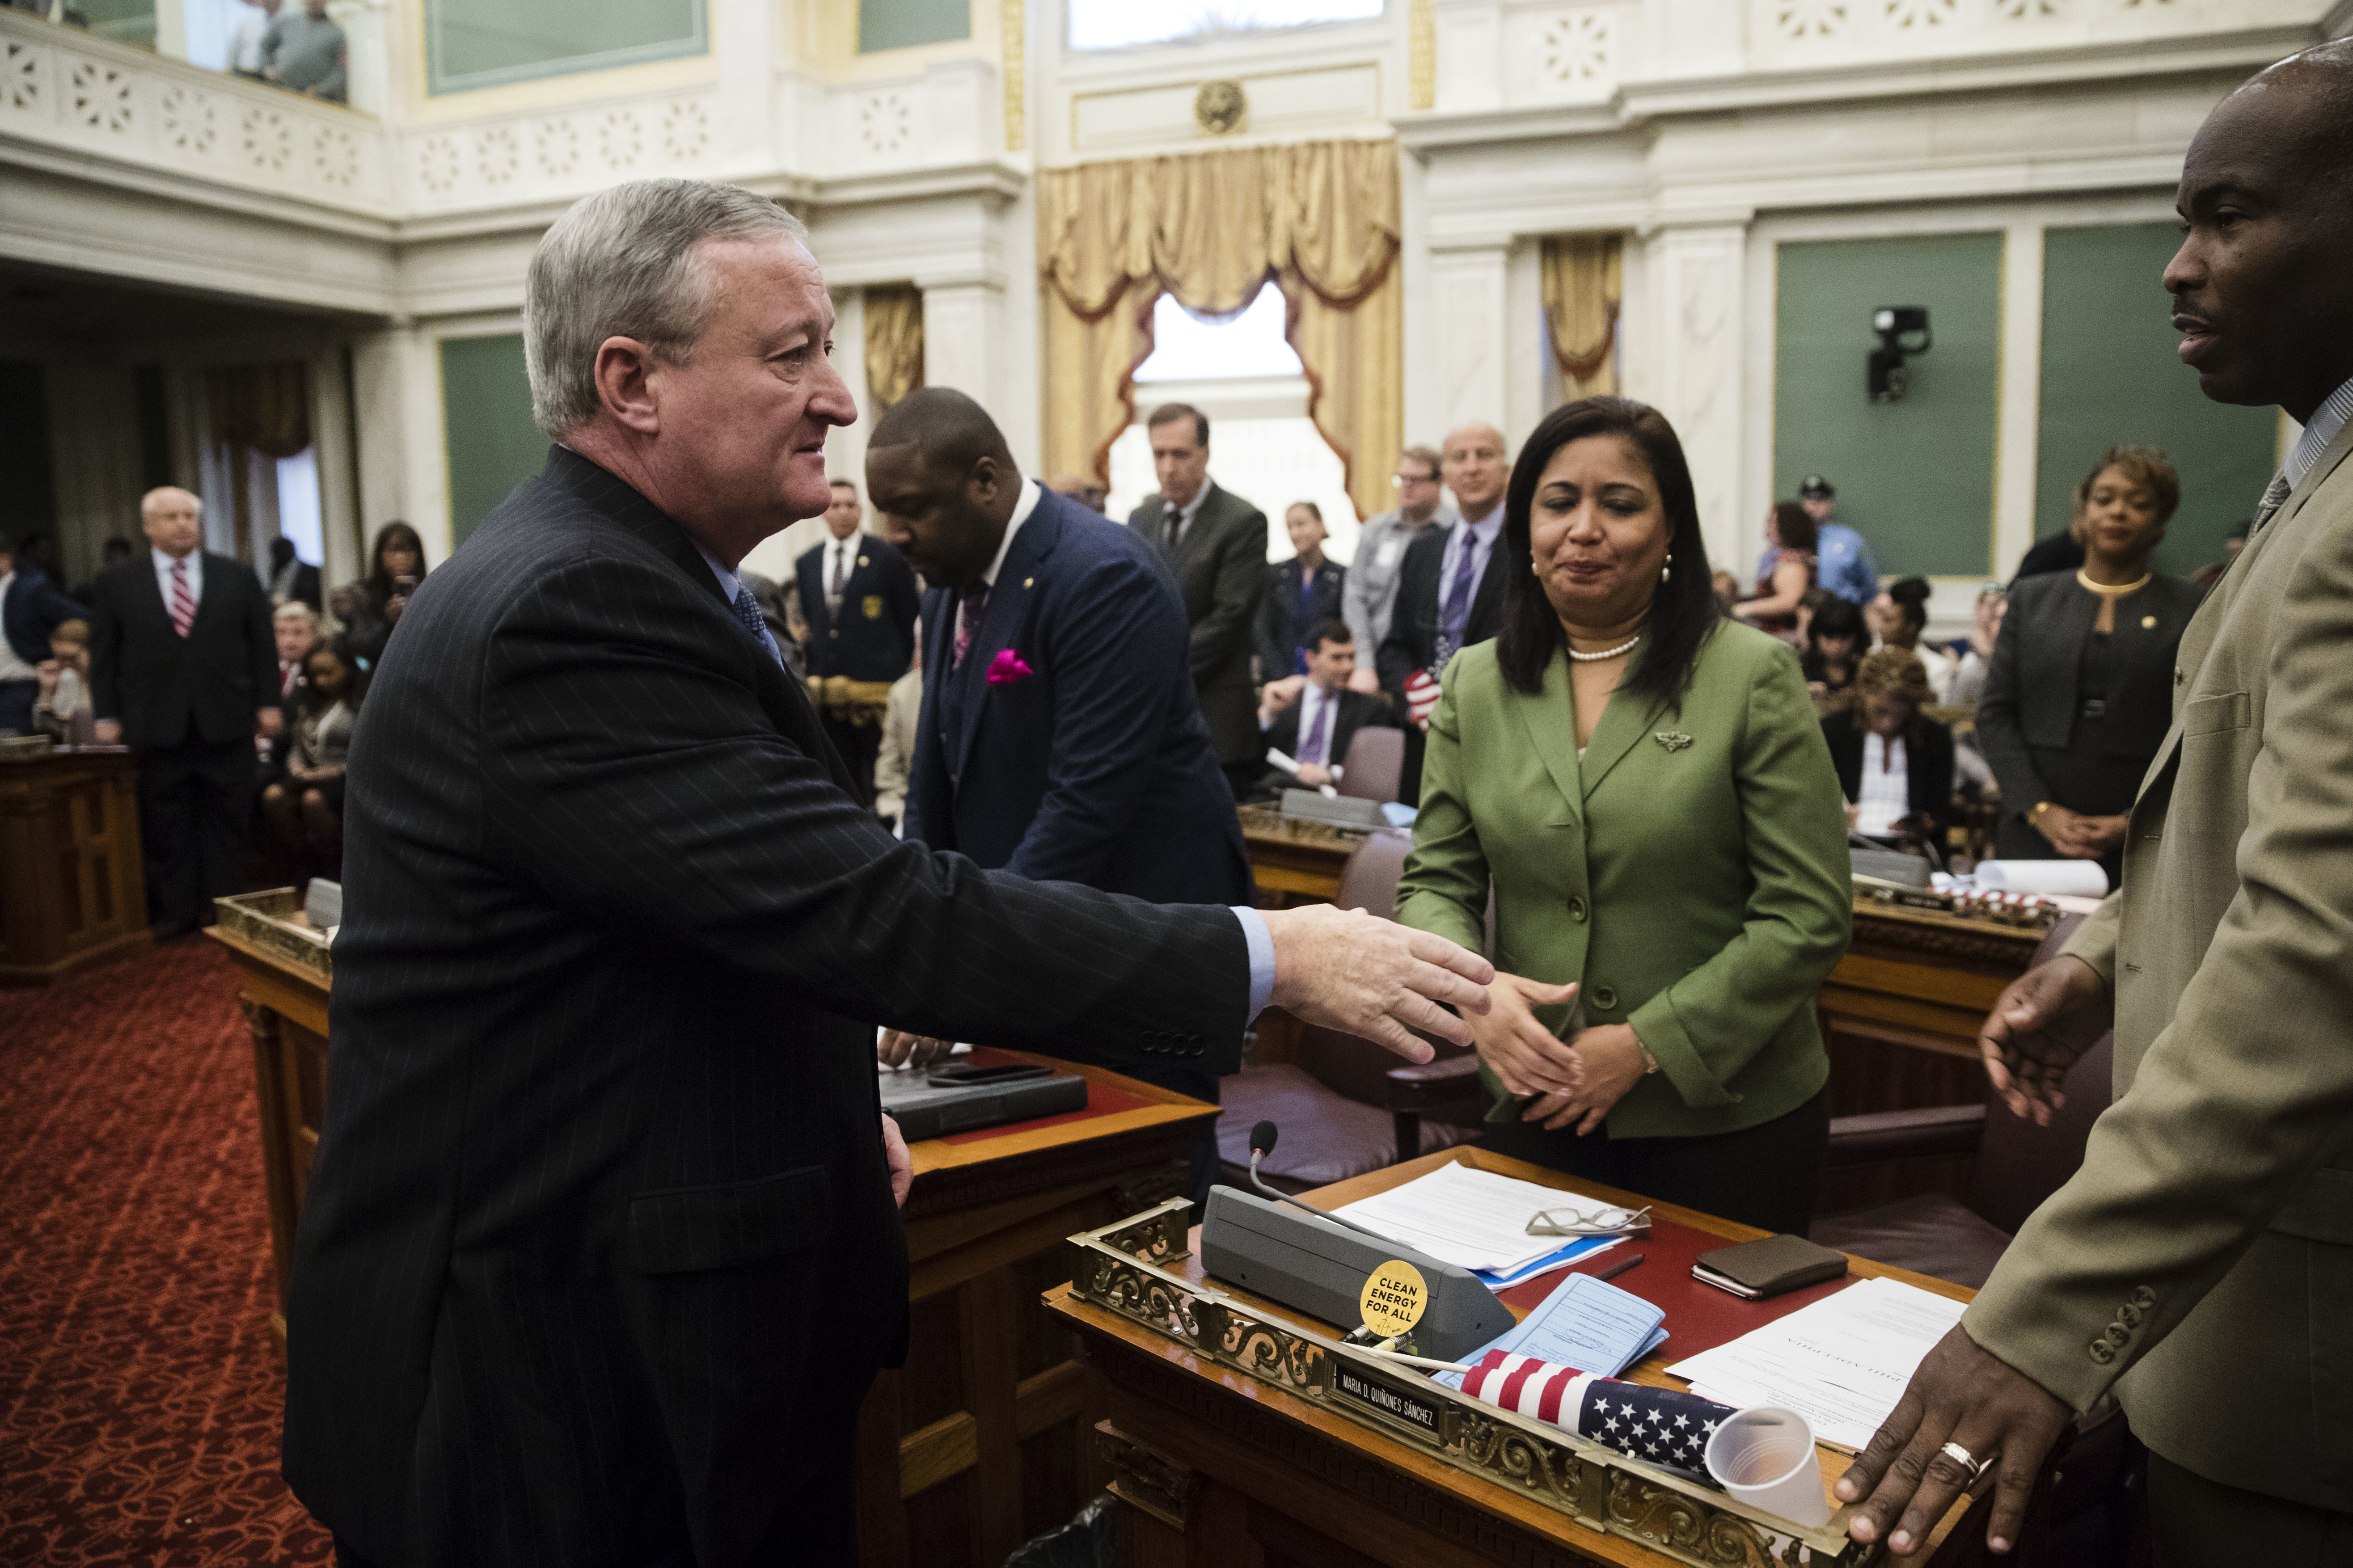 Philadelphia Mayor Jim Kenney, left, shakes hands with members of City Council at City Hall on Nov. 2, 2017. (AP Photo/Matt Rourke)